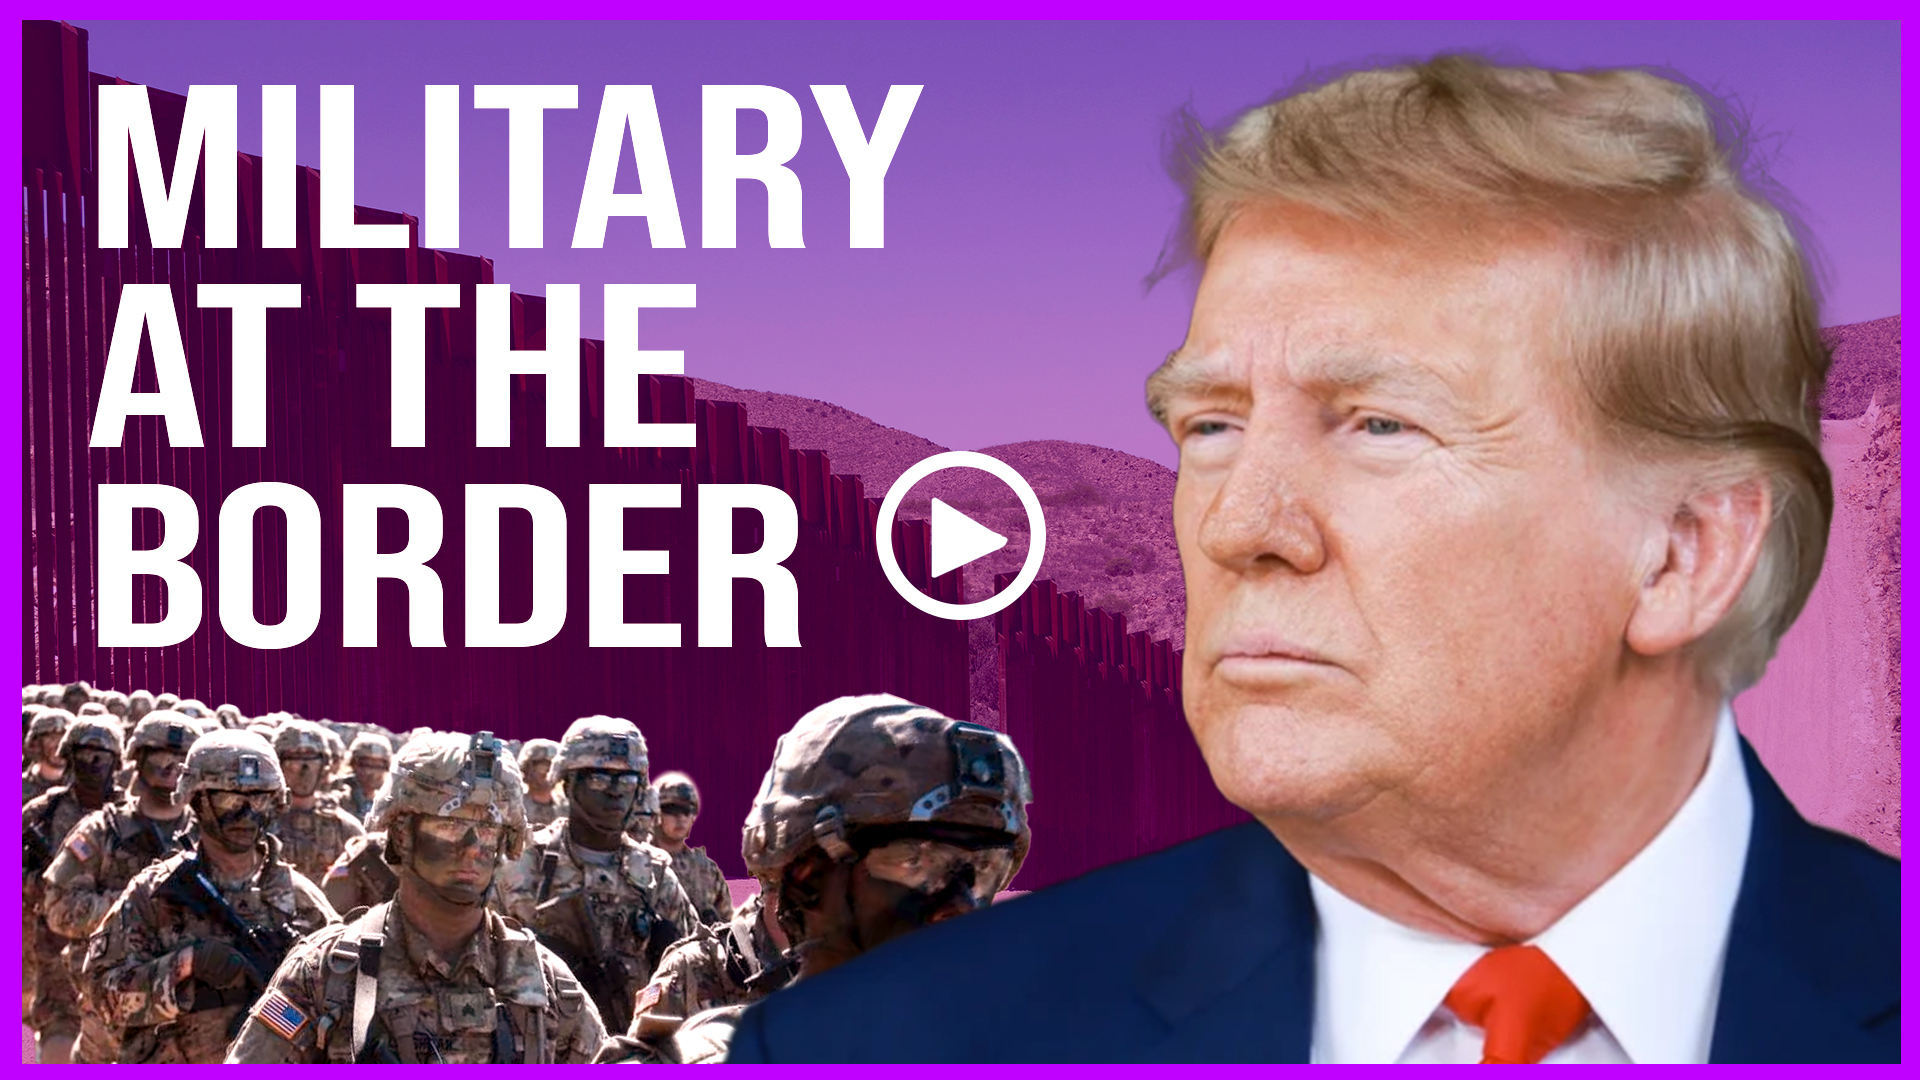 Military at the Border #politics #news #trump